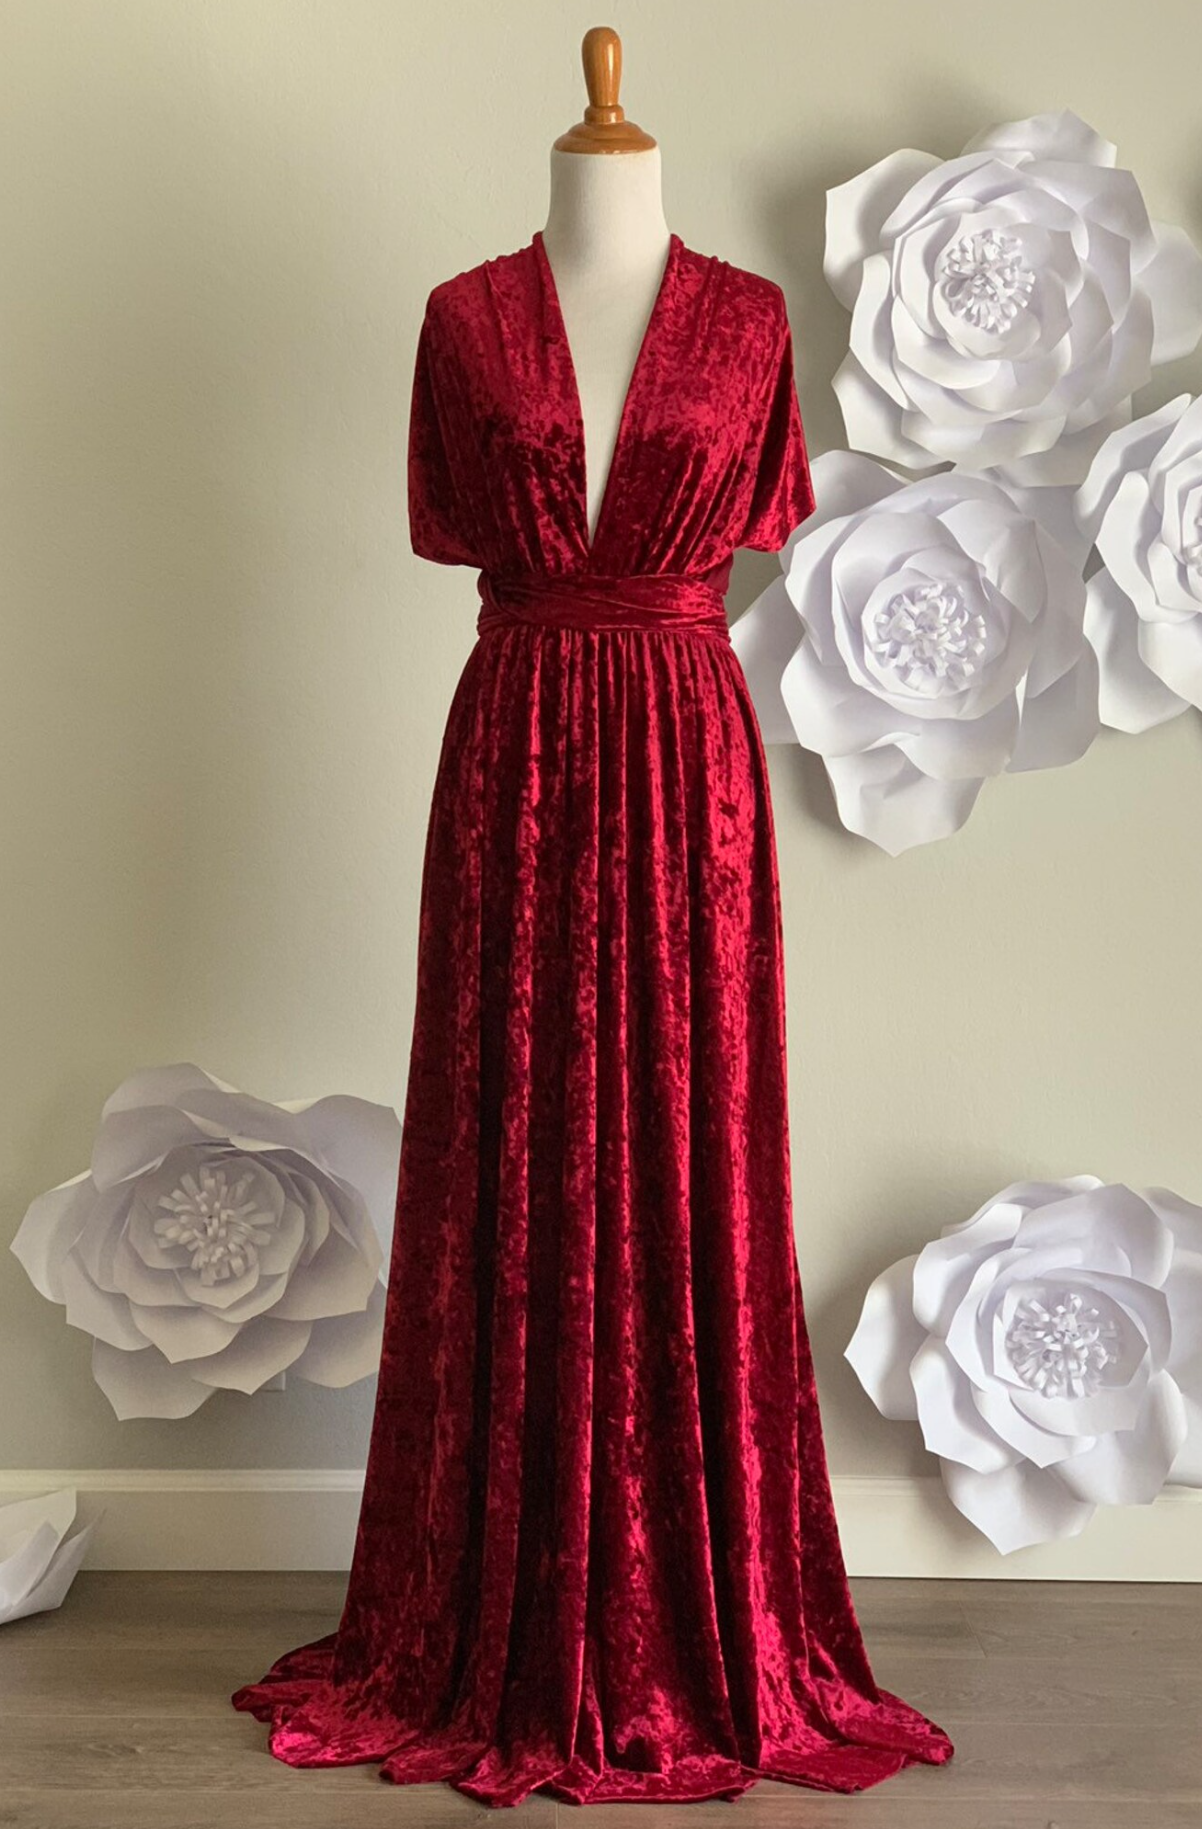 Burgundy Crushed Velvet Infinity Dress/ Wrap Convertible Bridesmaid Dress,J23-22 - ScholleDress